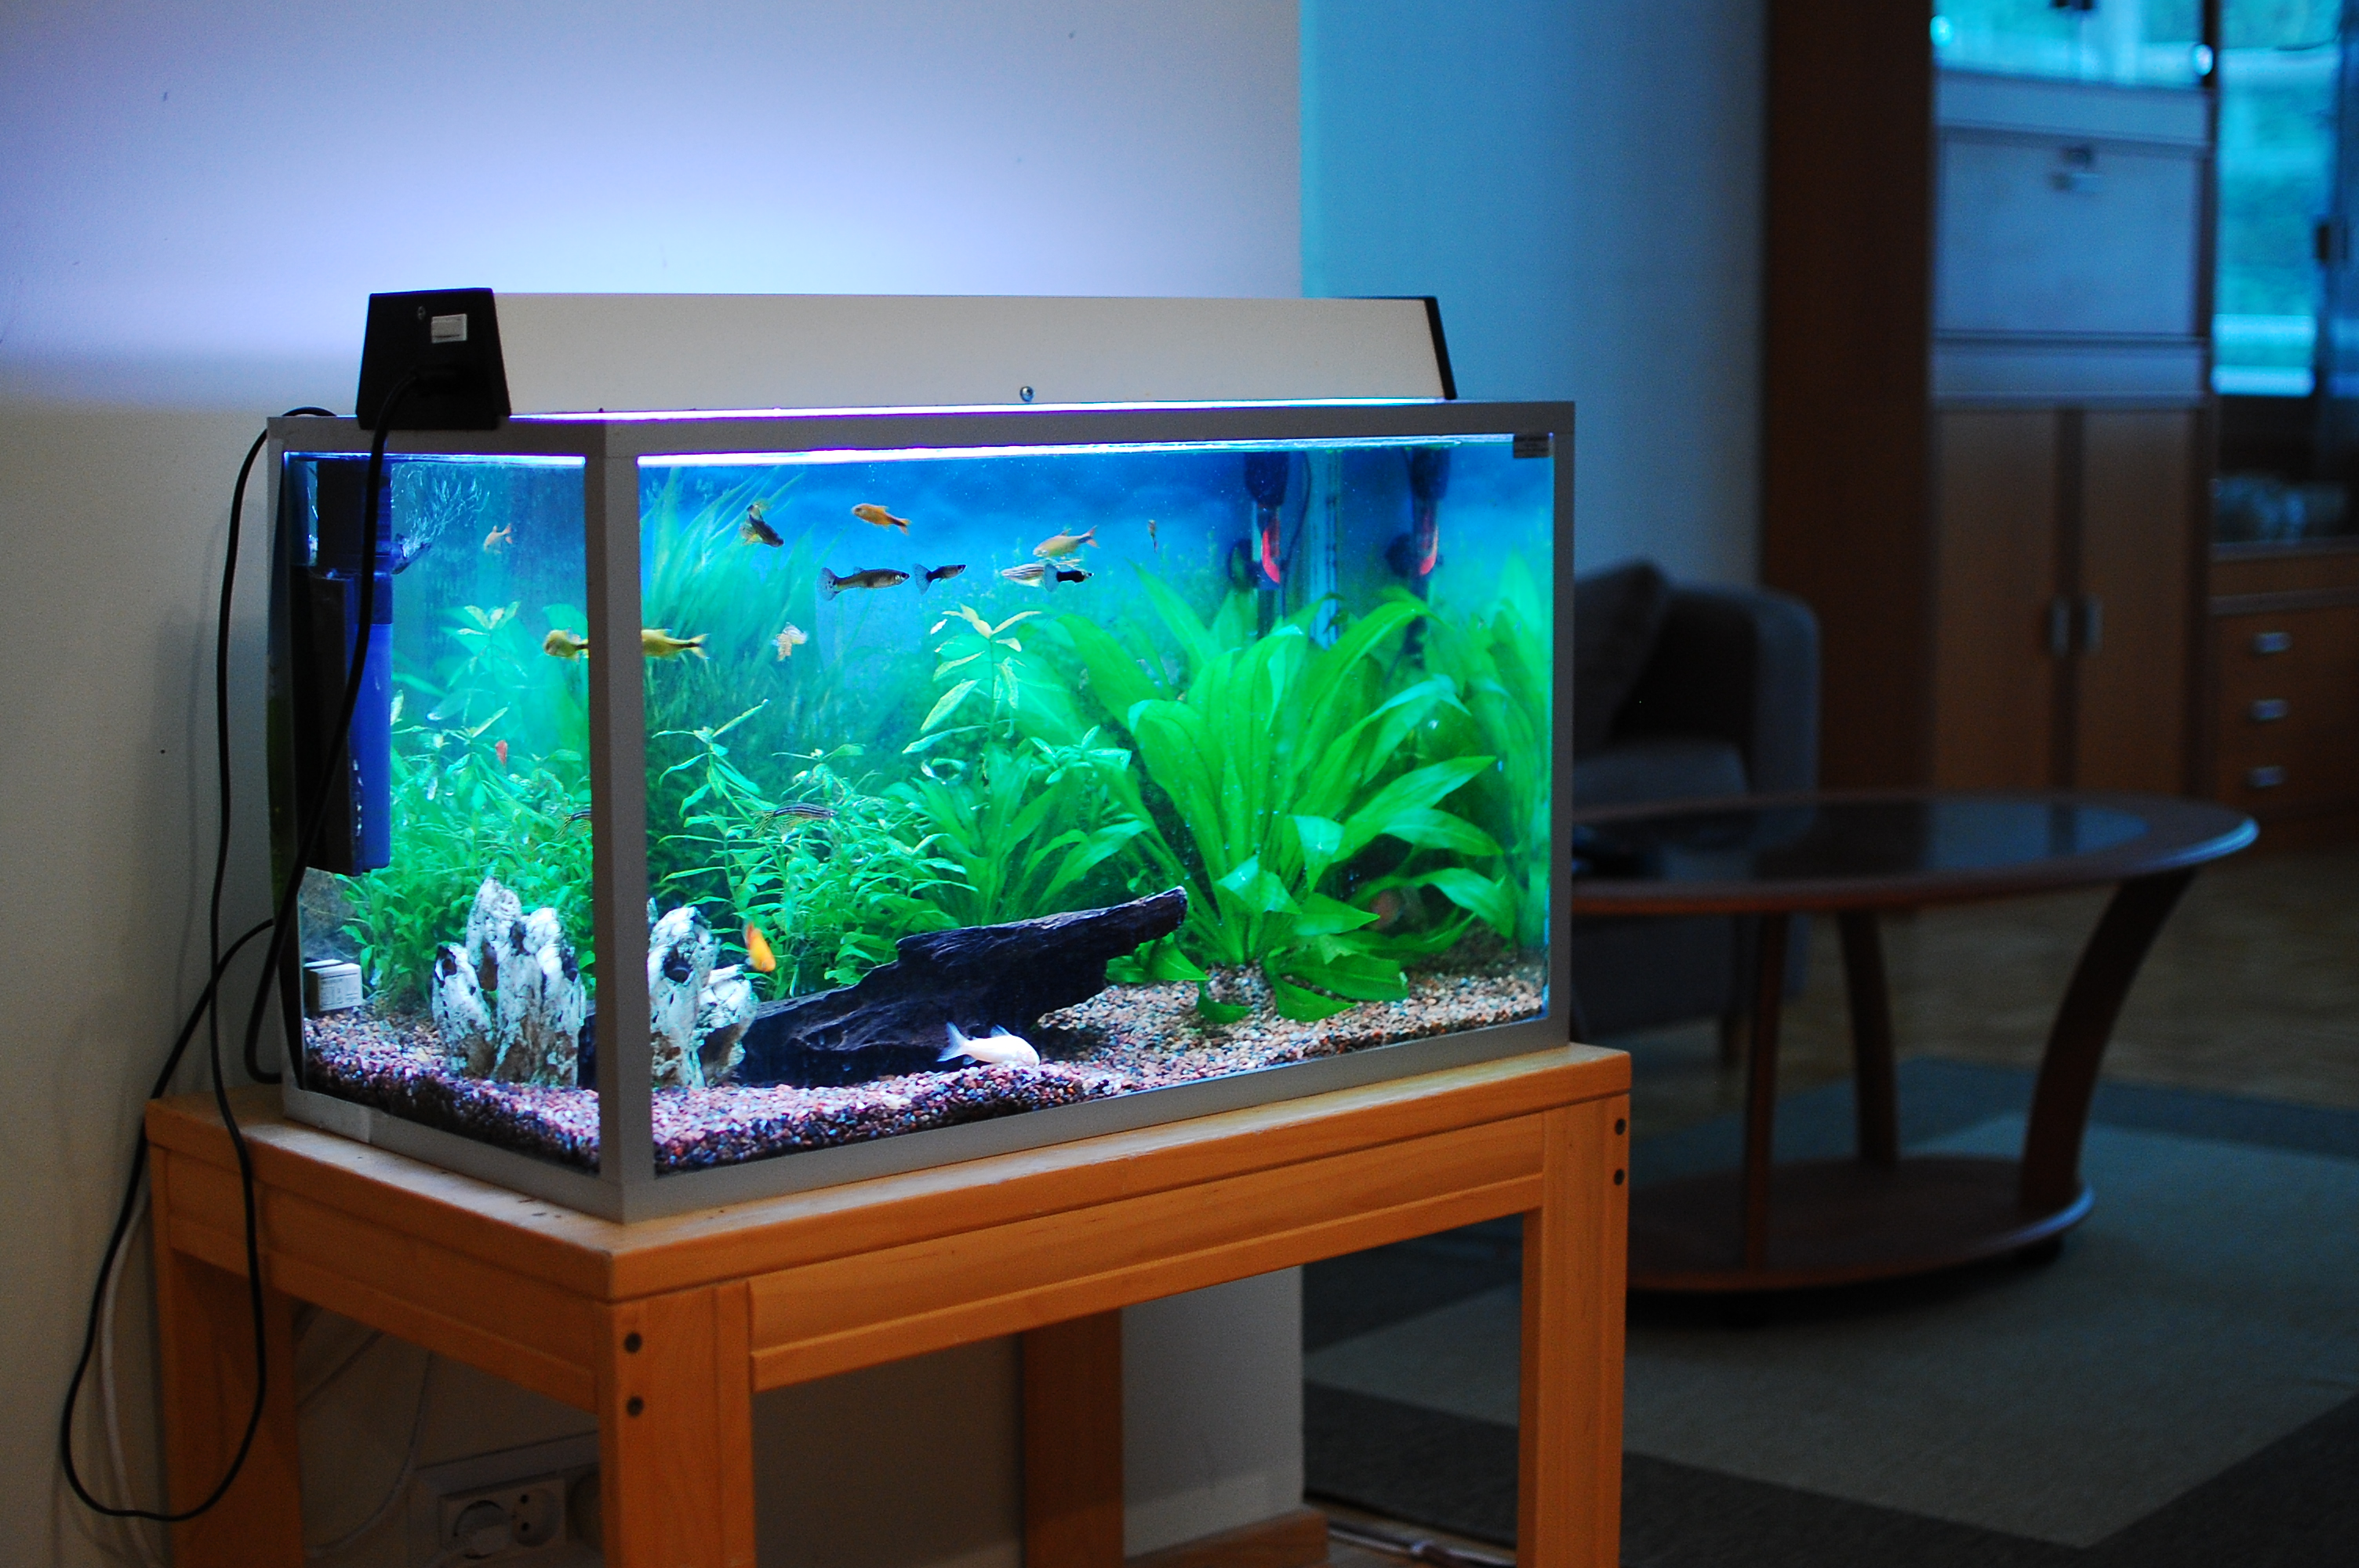 From amateur tank to pro tank | Freshwater Aquarium Talk